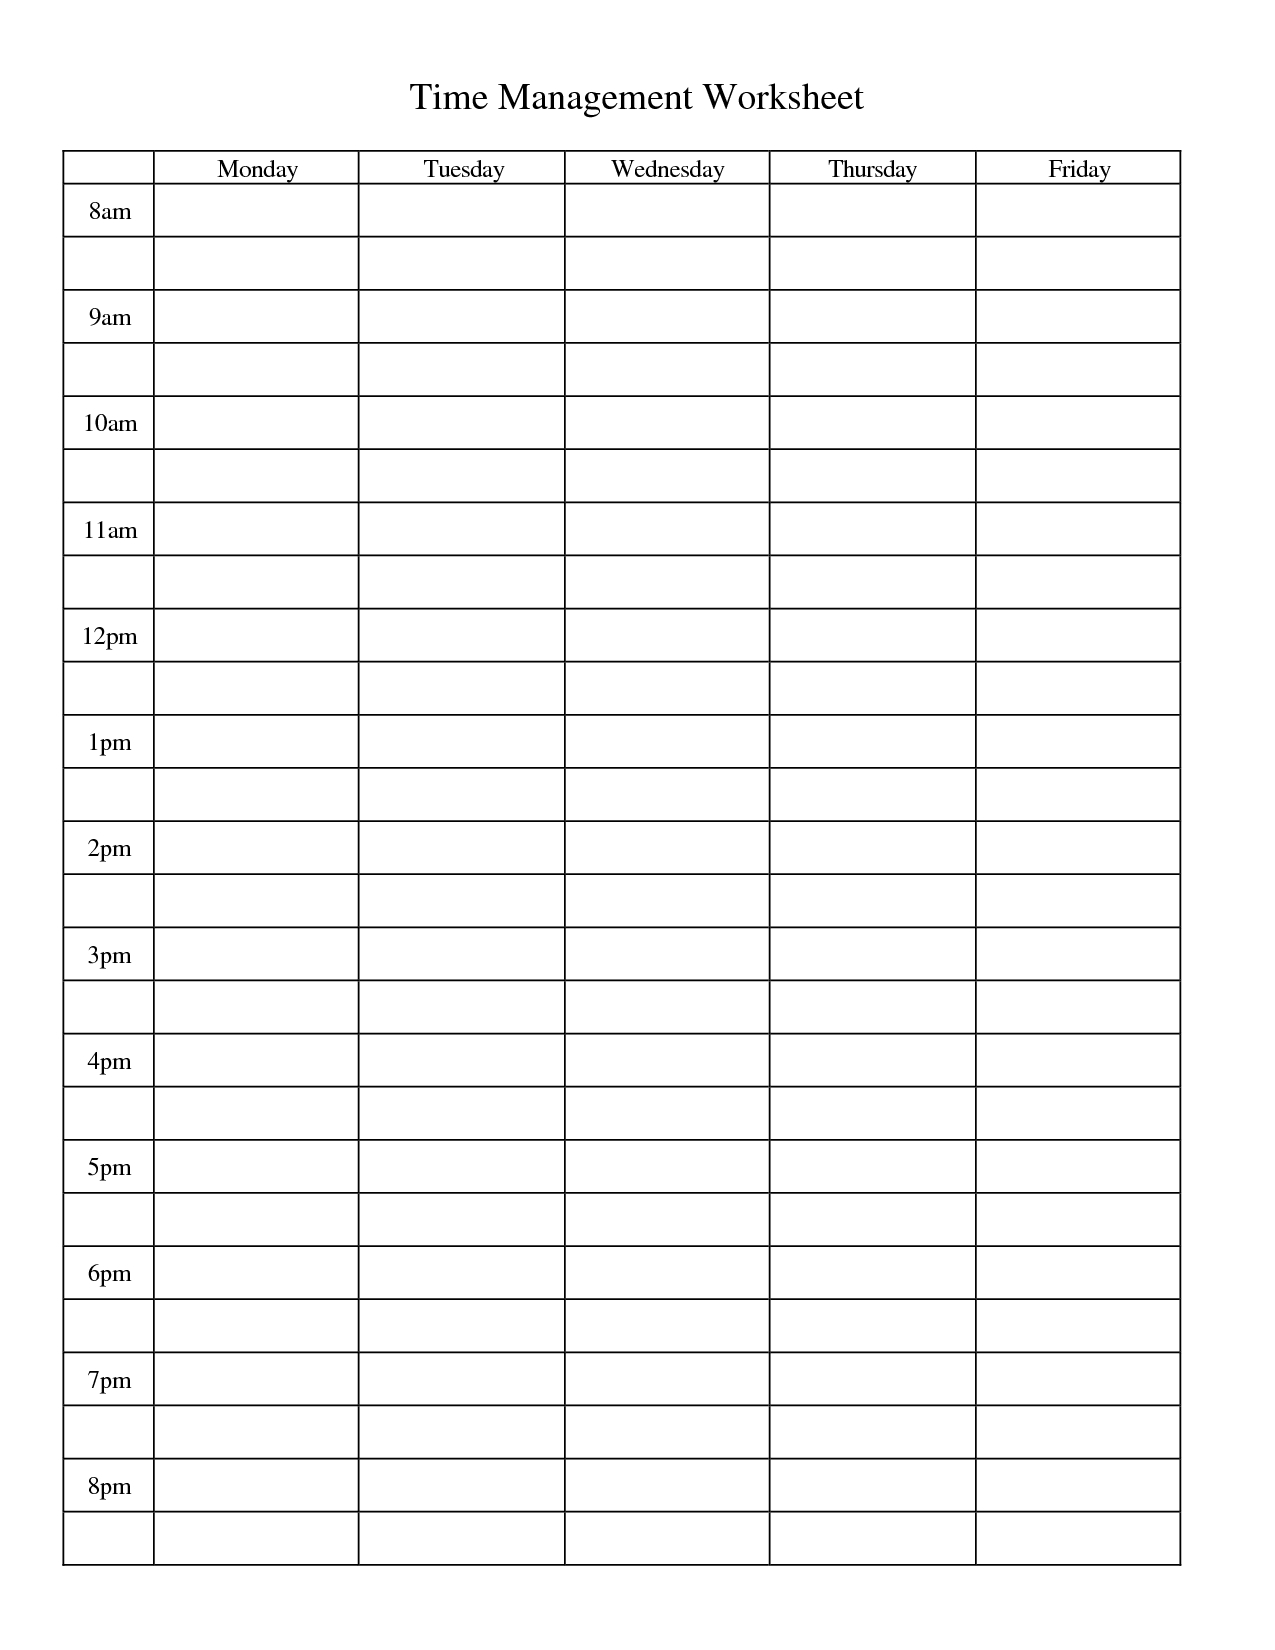 Time Management Worksheet Pdf - Google Search | Organization | Time - Free Printable Time Tracking Sheets